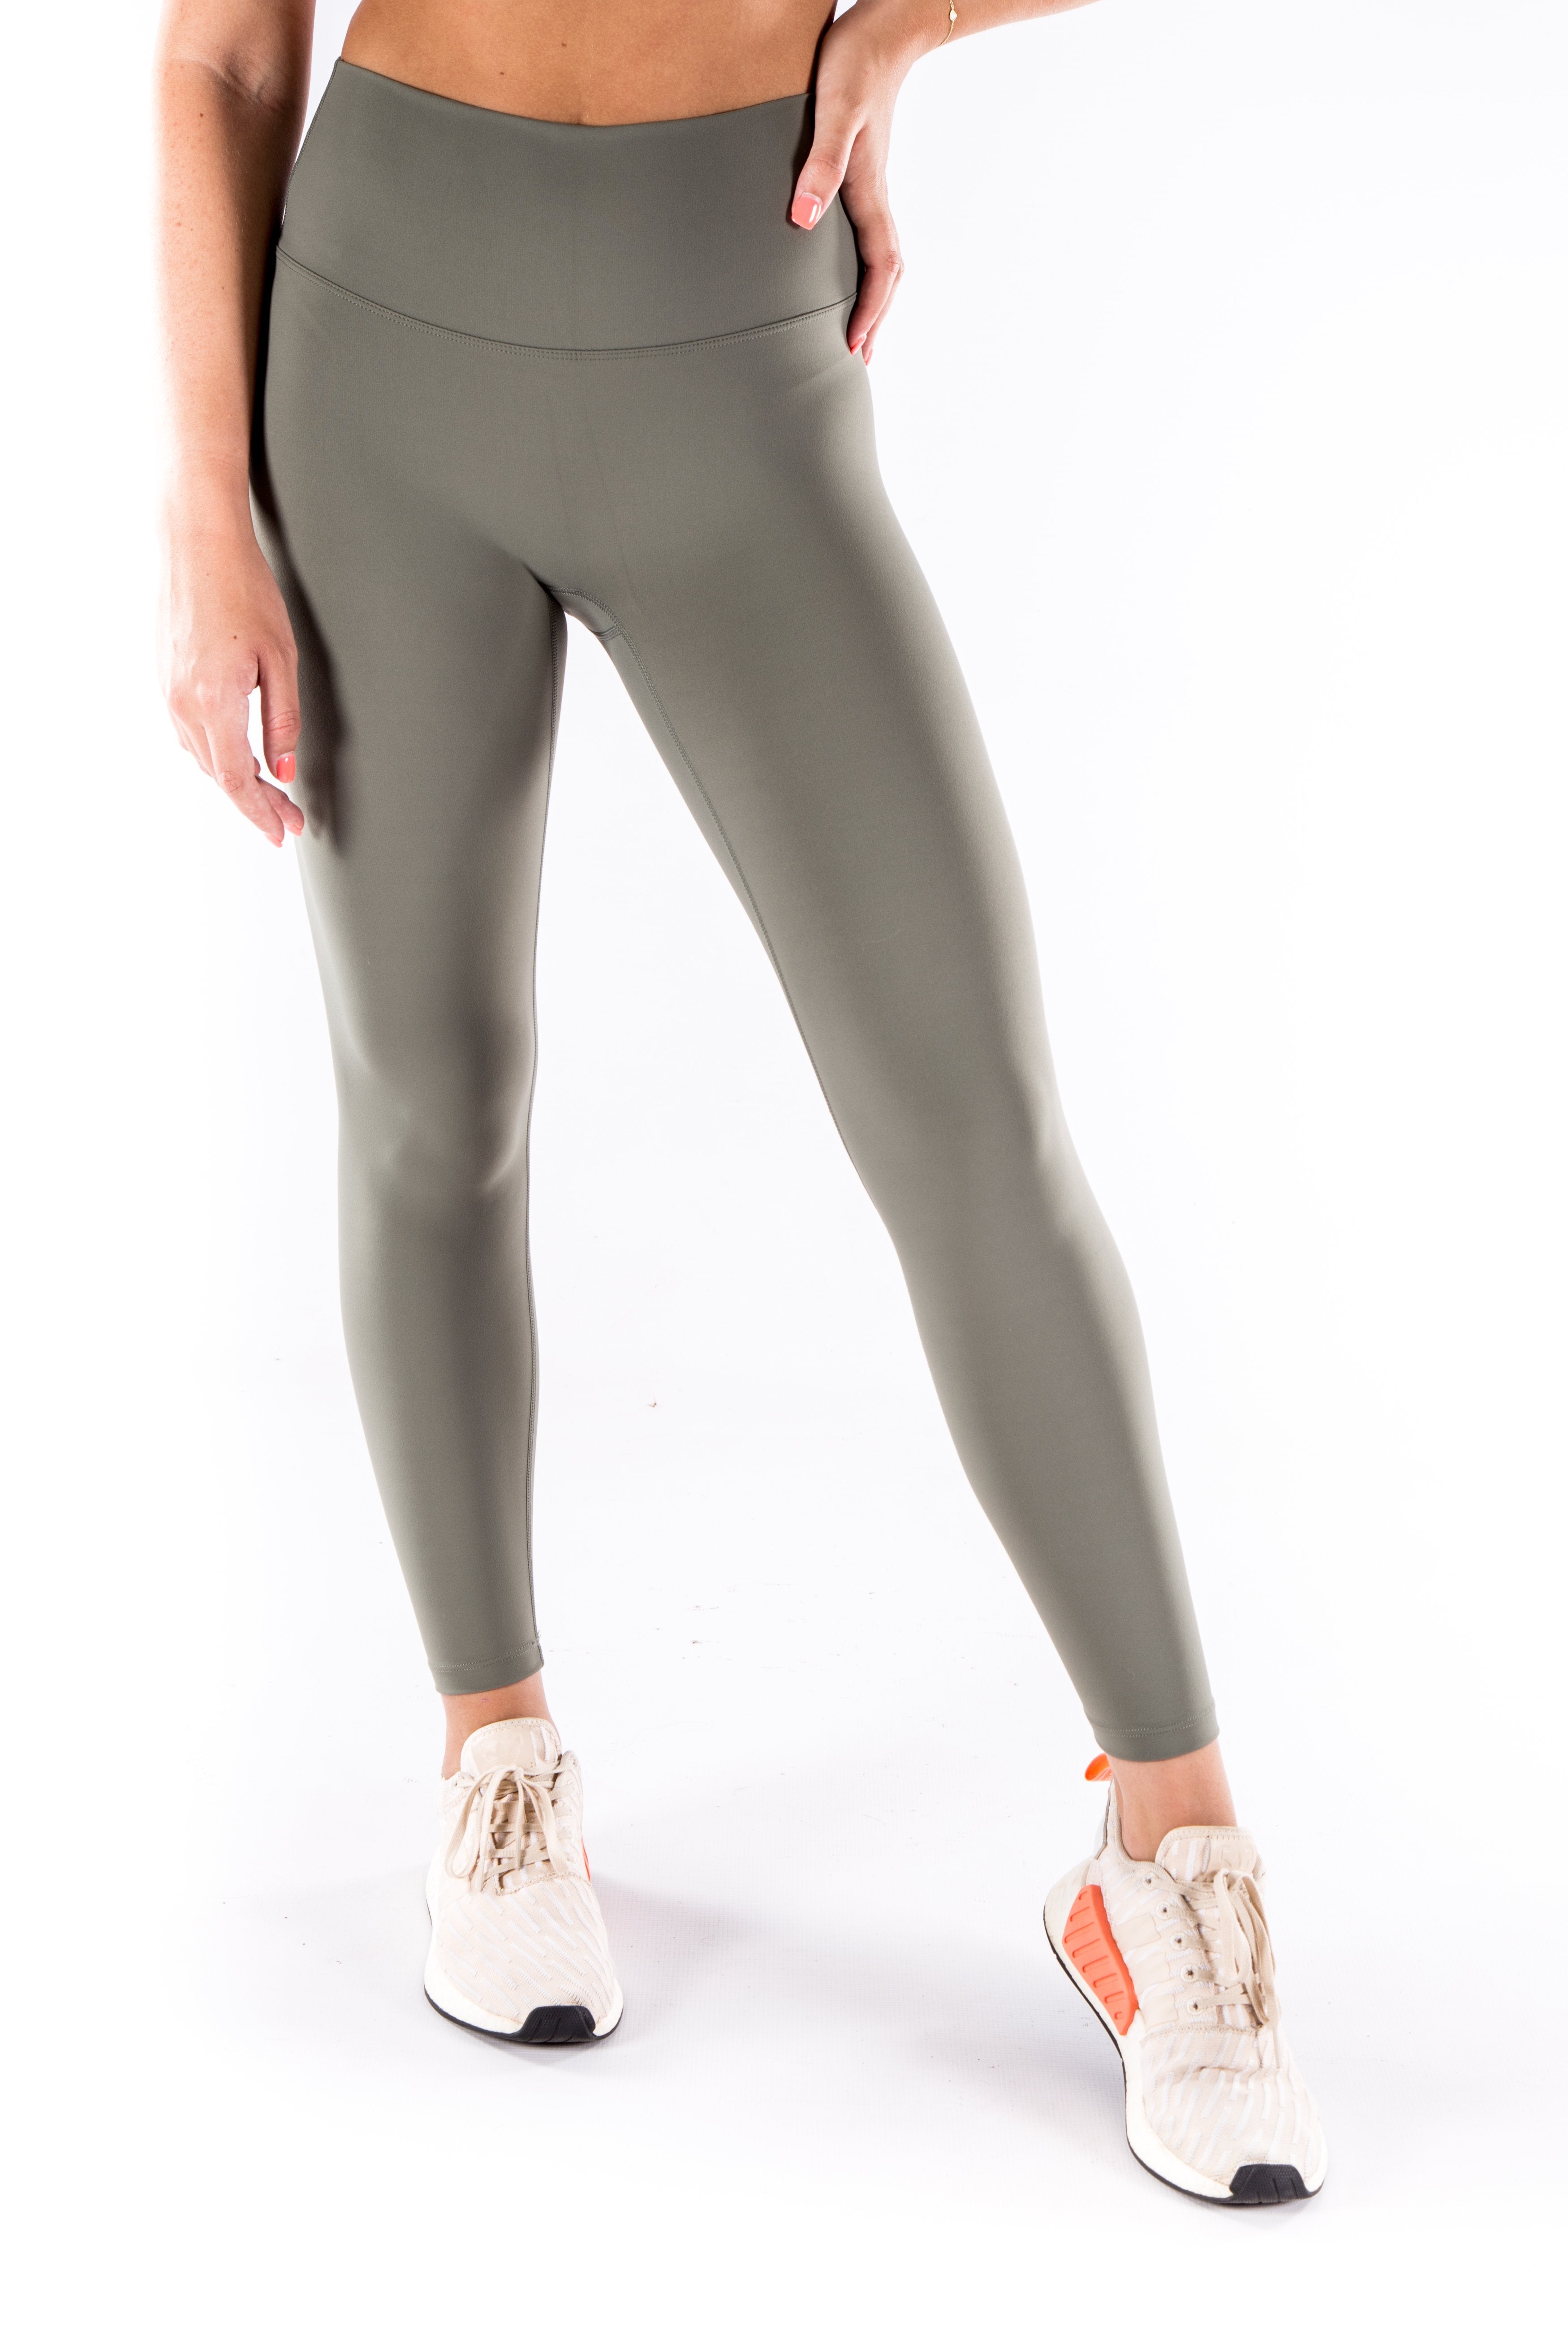 Image of Wonderfit Lulu  - Buttery soft Yoga Pants- Olive